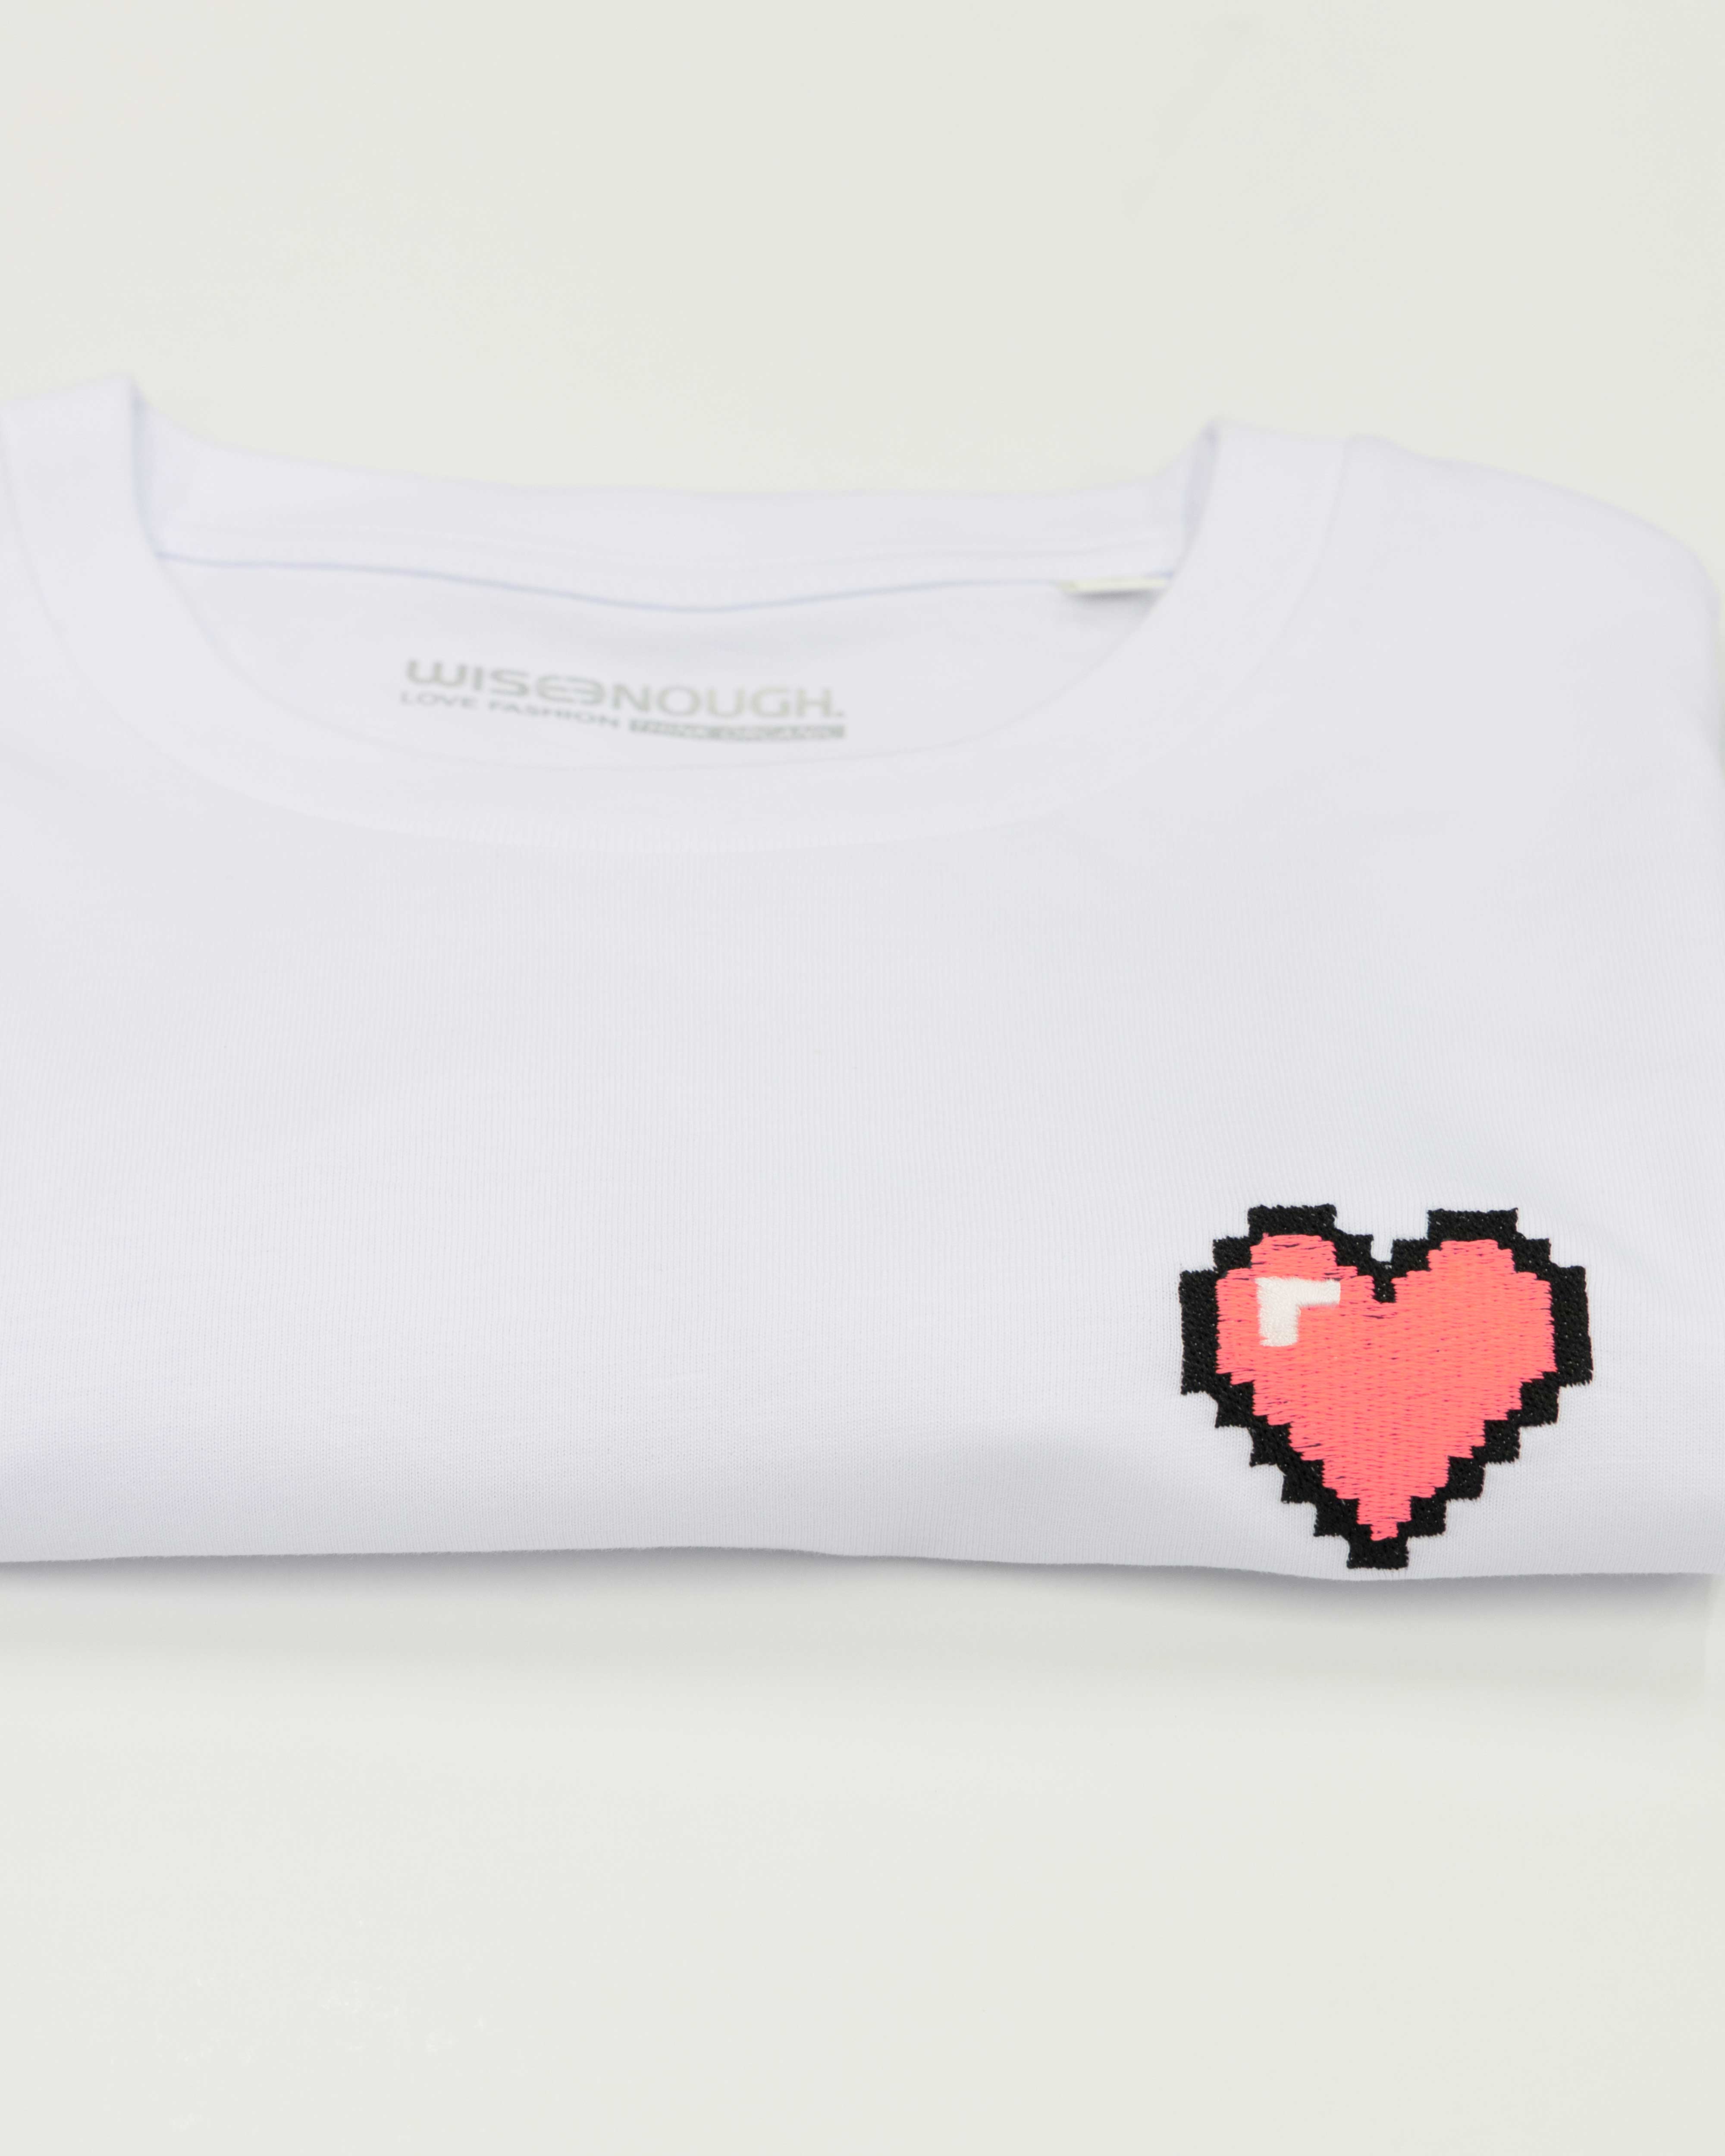 Unisex T-Shirt - OK, cool*